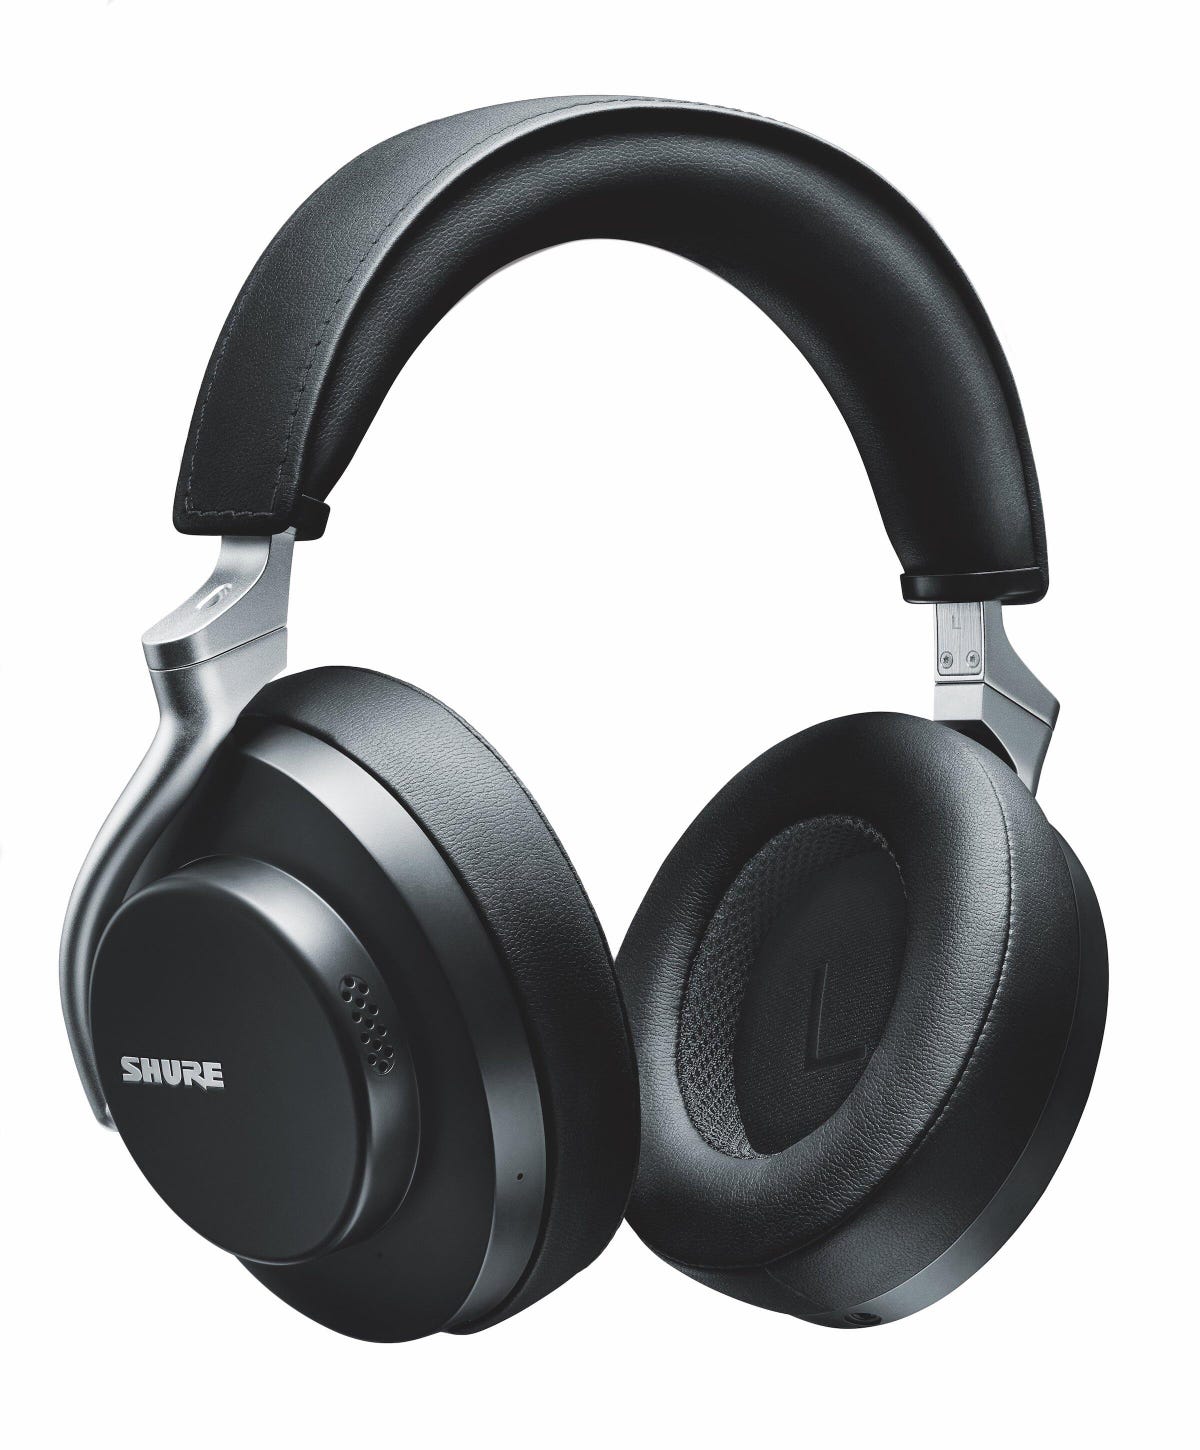 shure-aonic-50-headphones